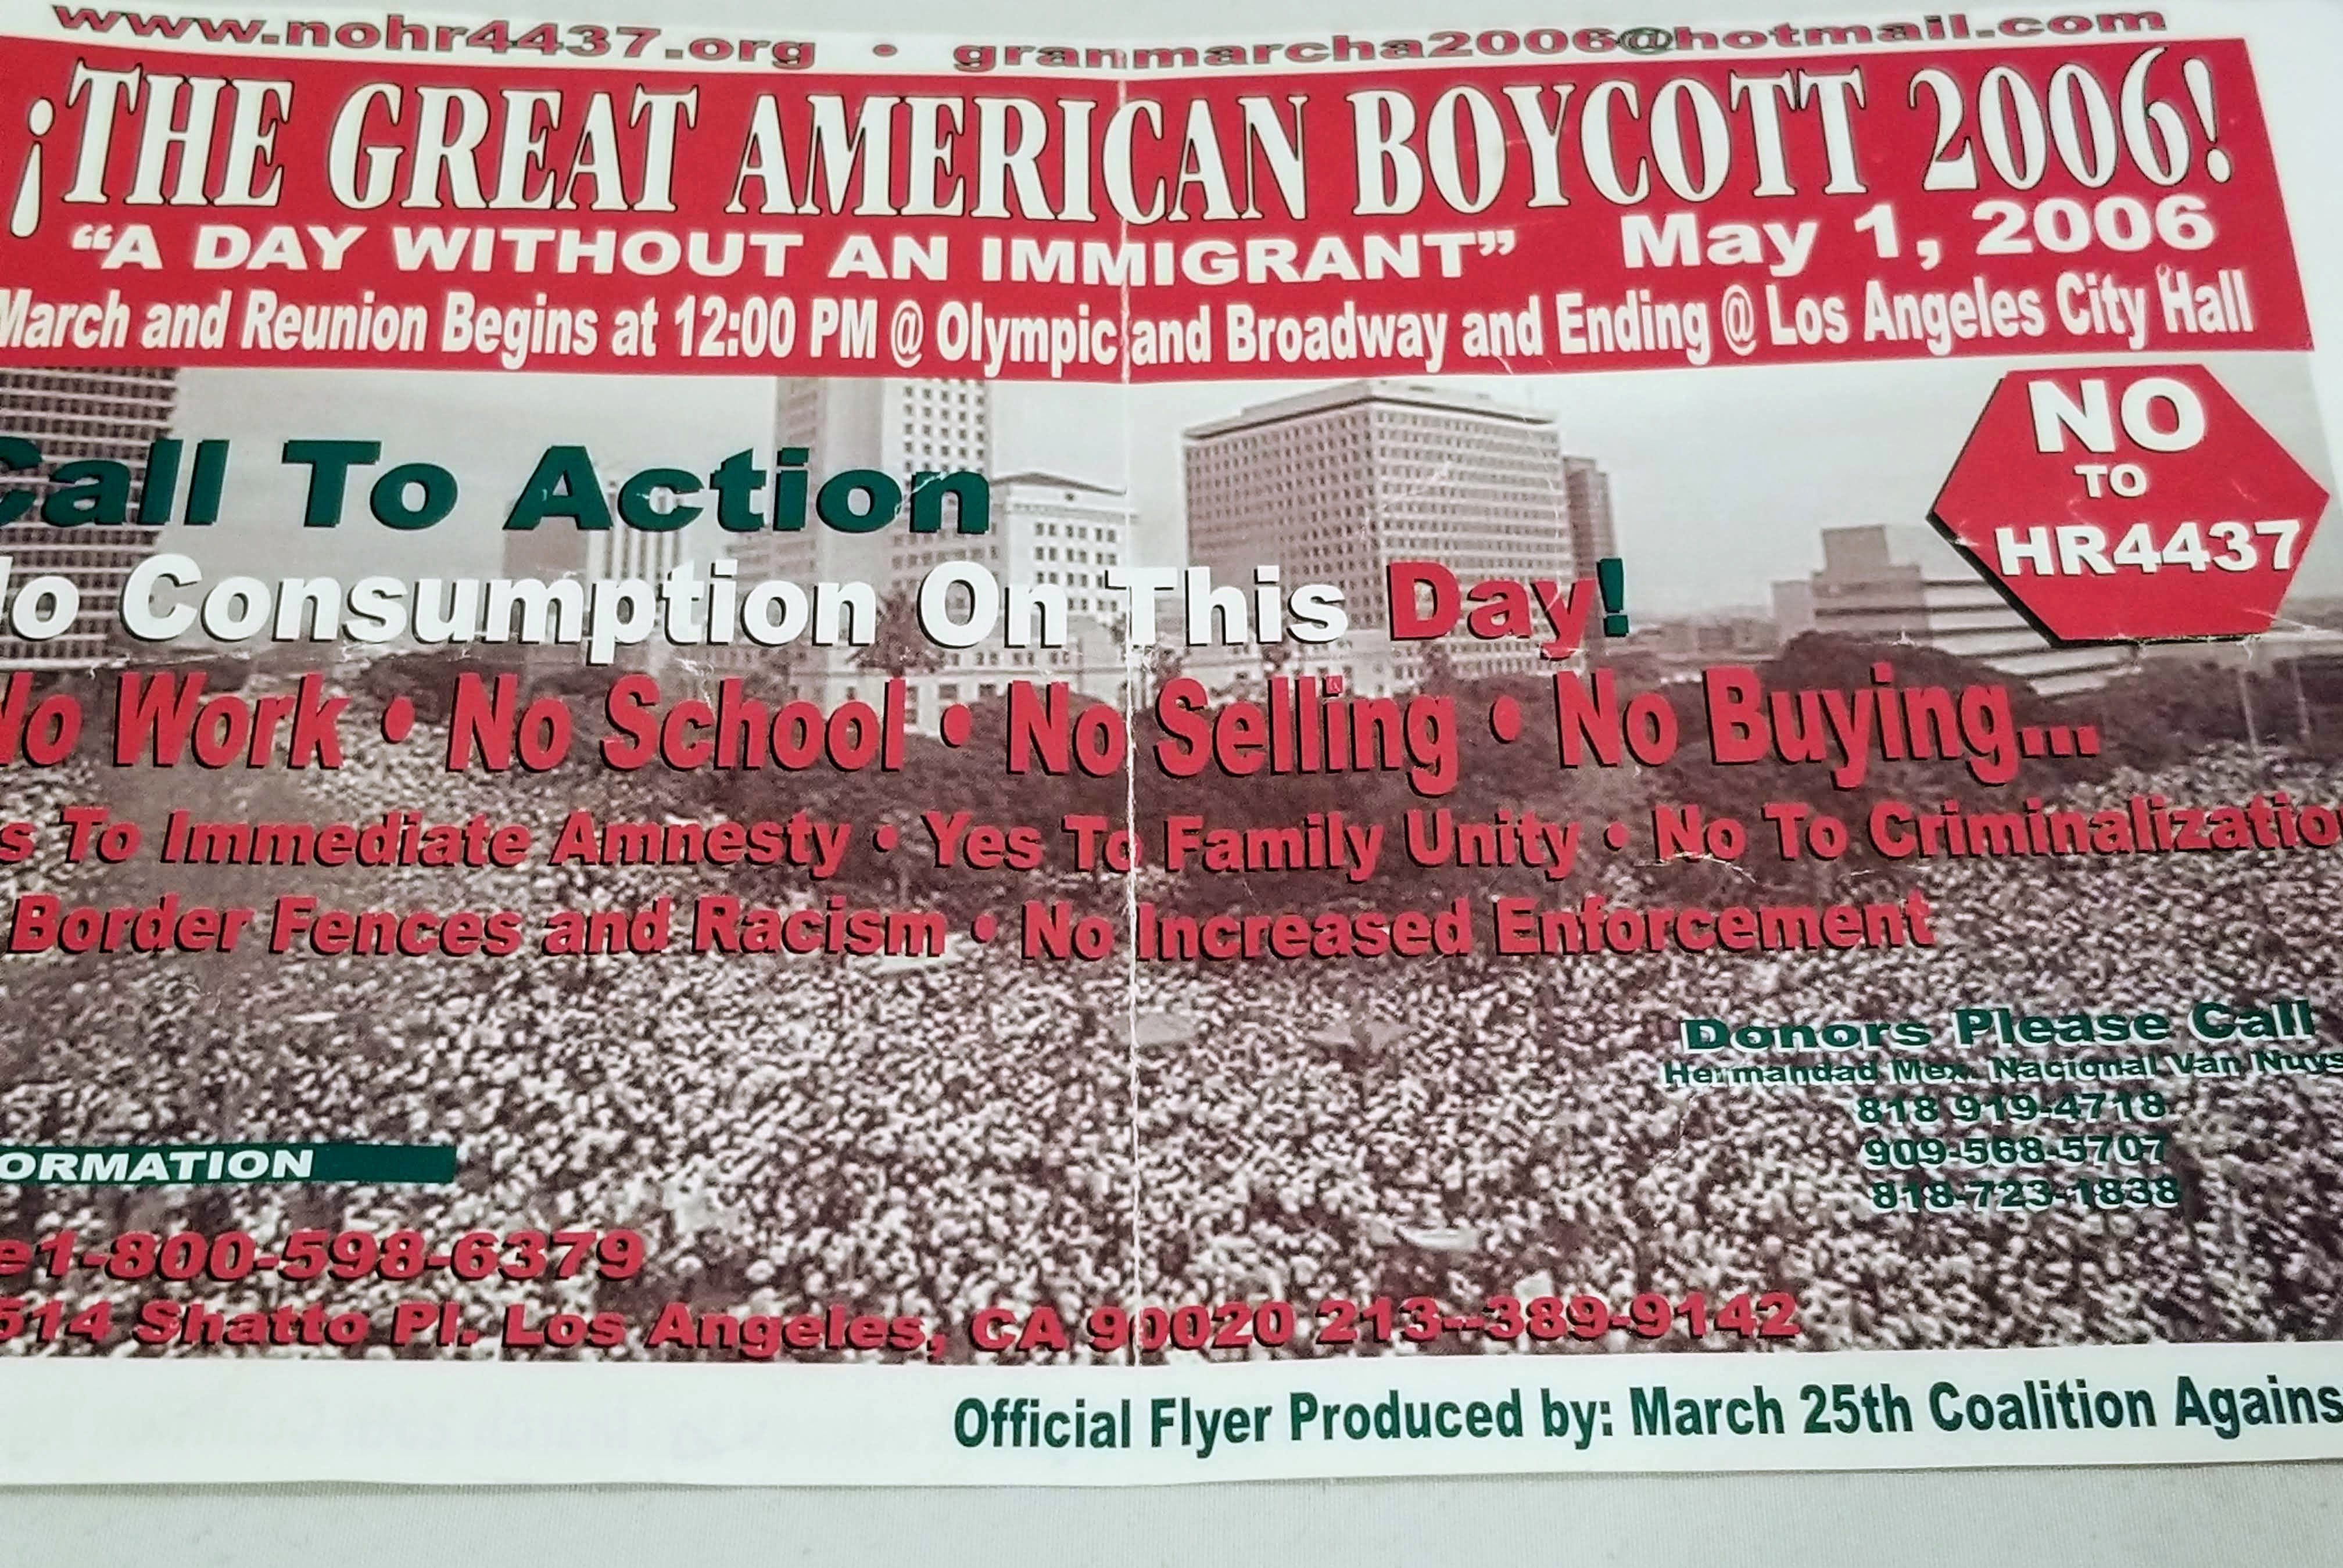 The Great American Boycott 2006!  Flyer!